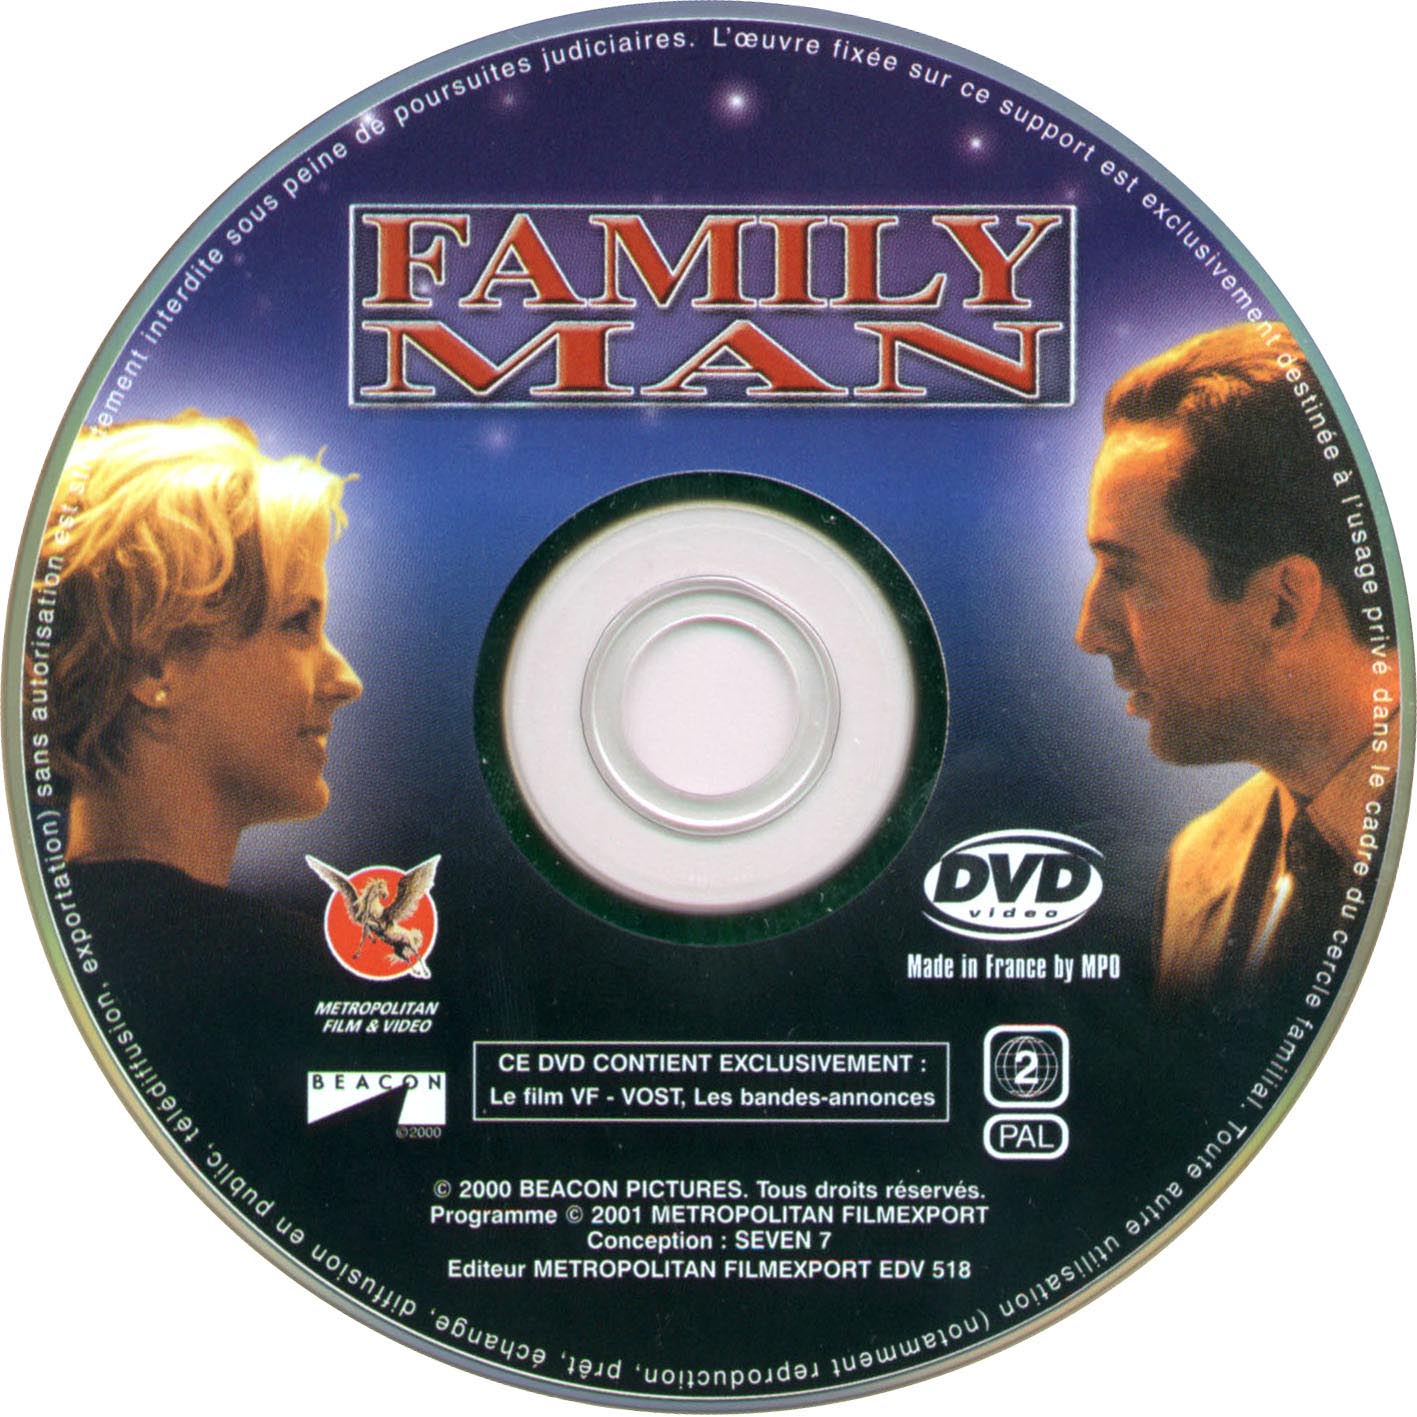 Family man (DVD)